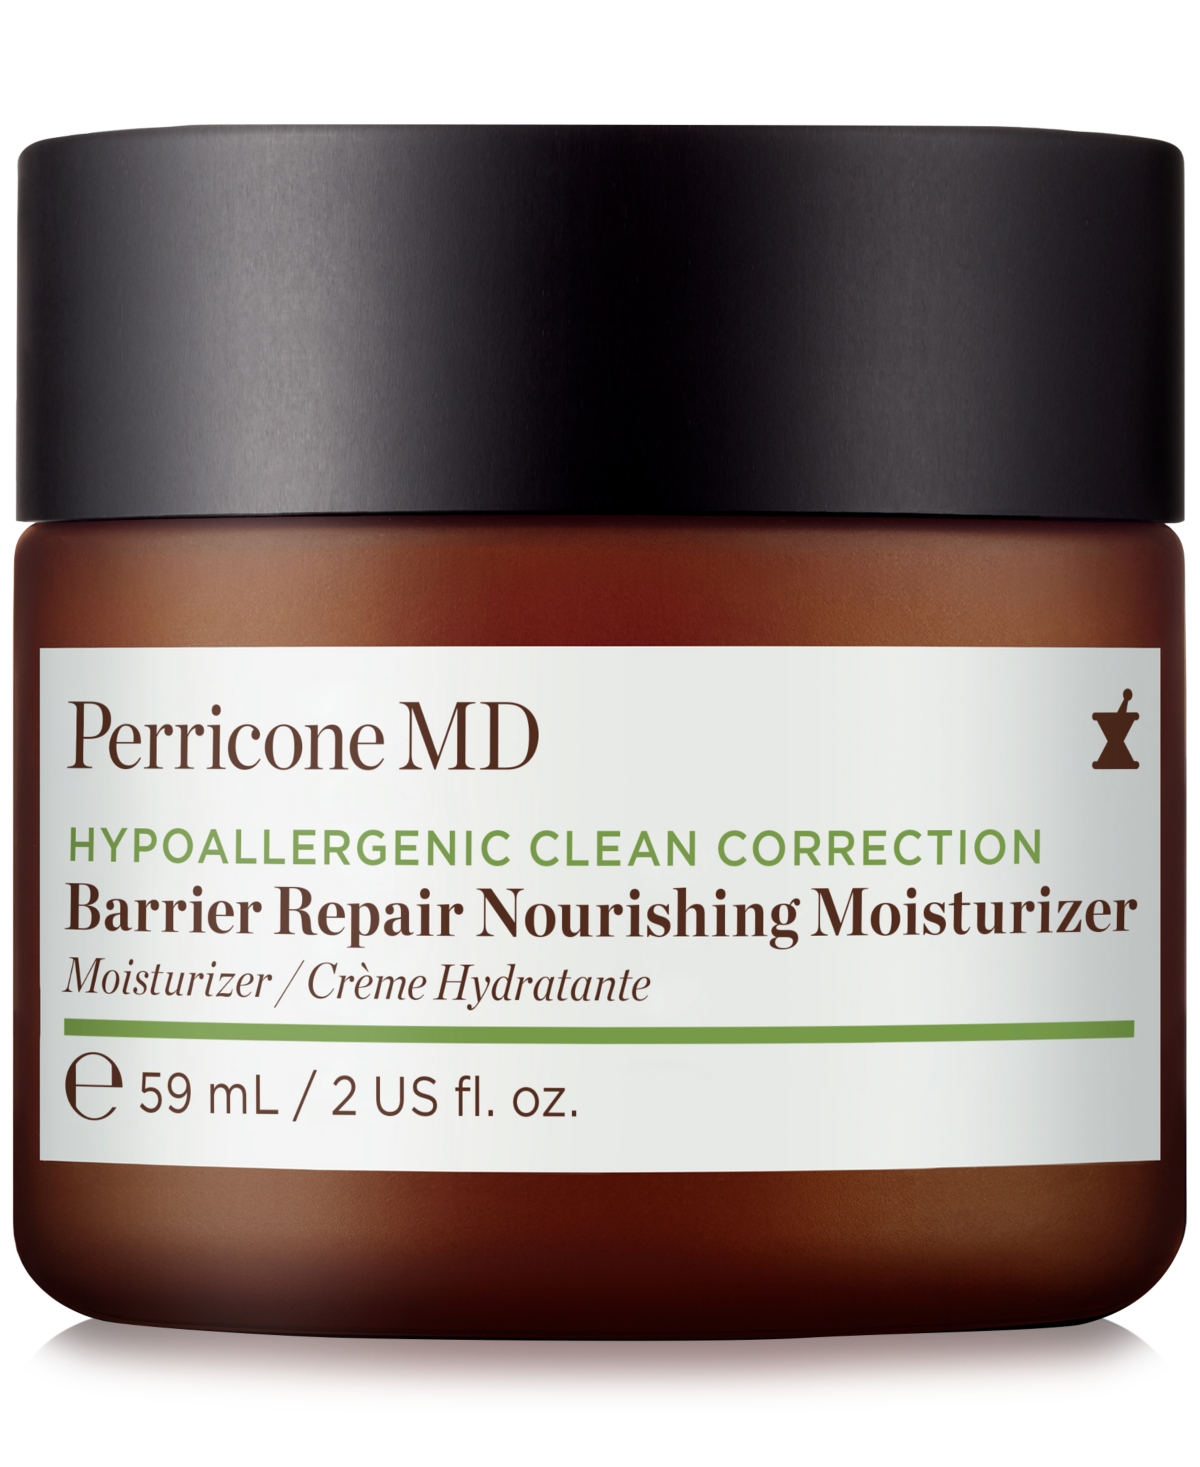 Perricone Md Barrier Repair Nourishing Moisturizer, 2 Oz.